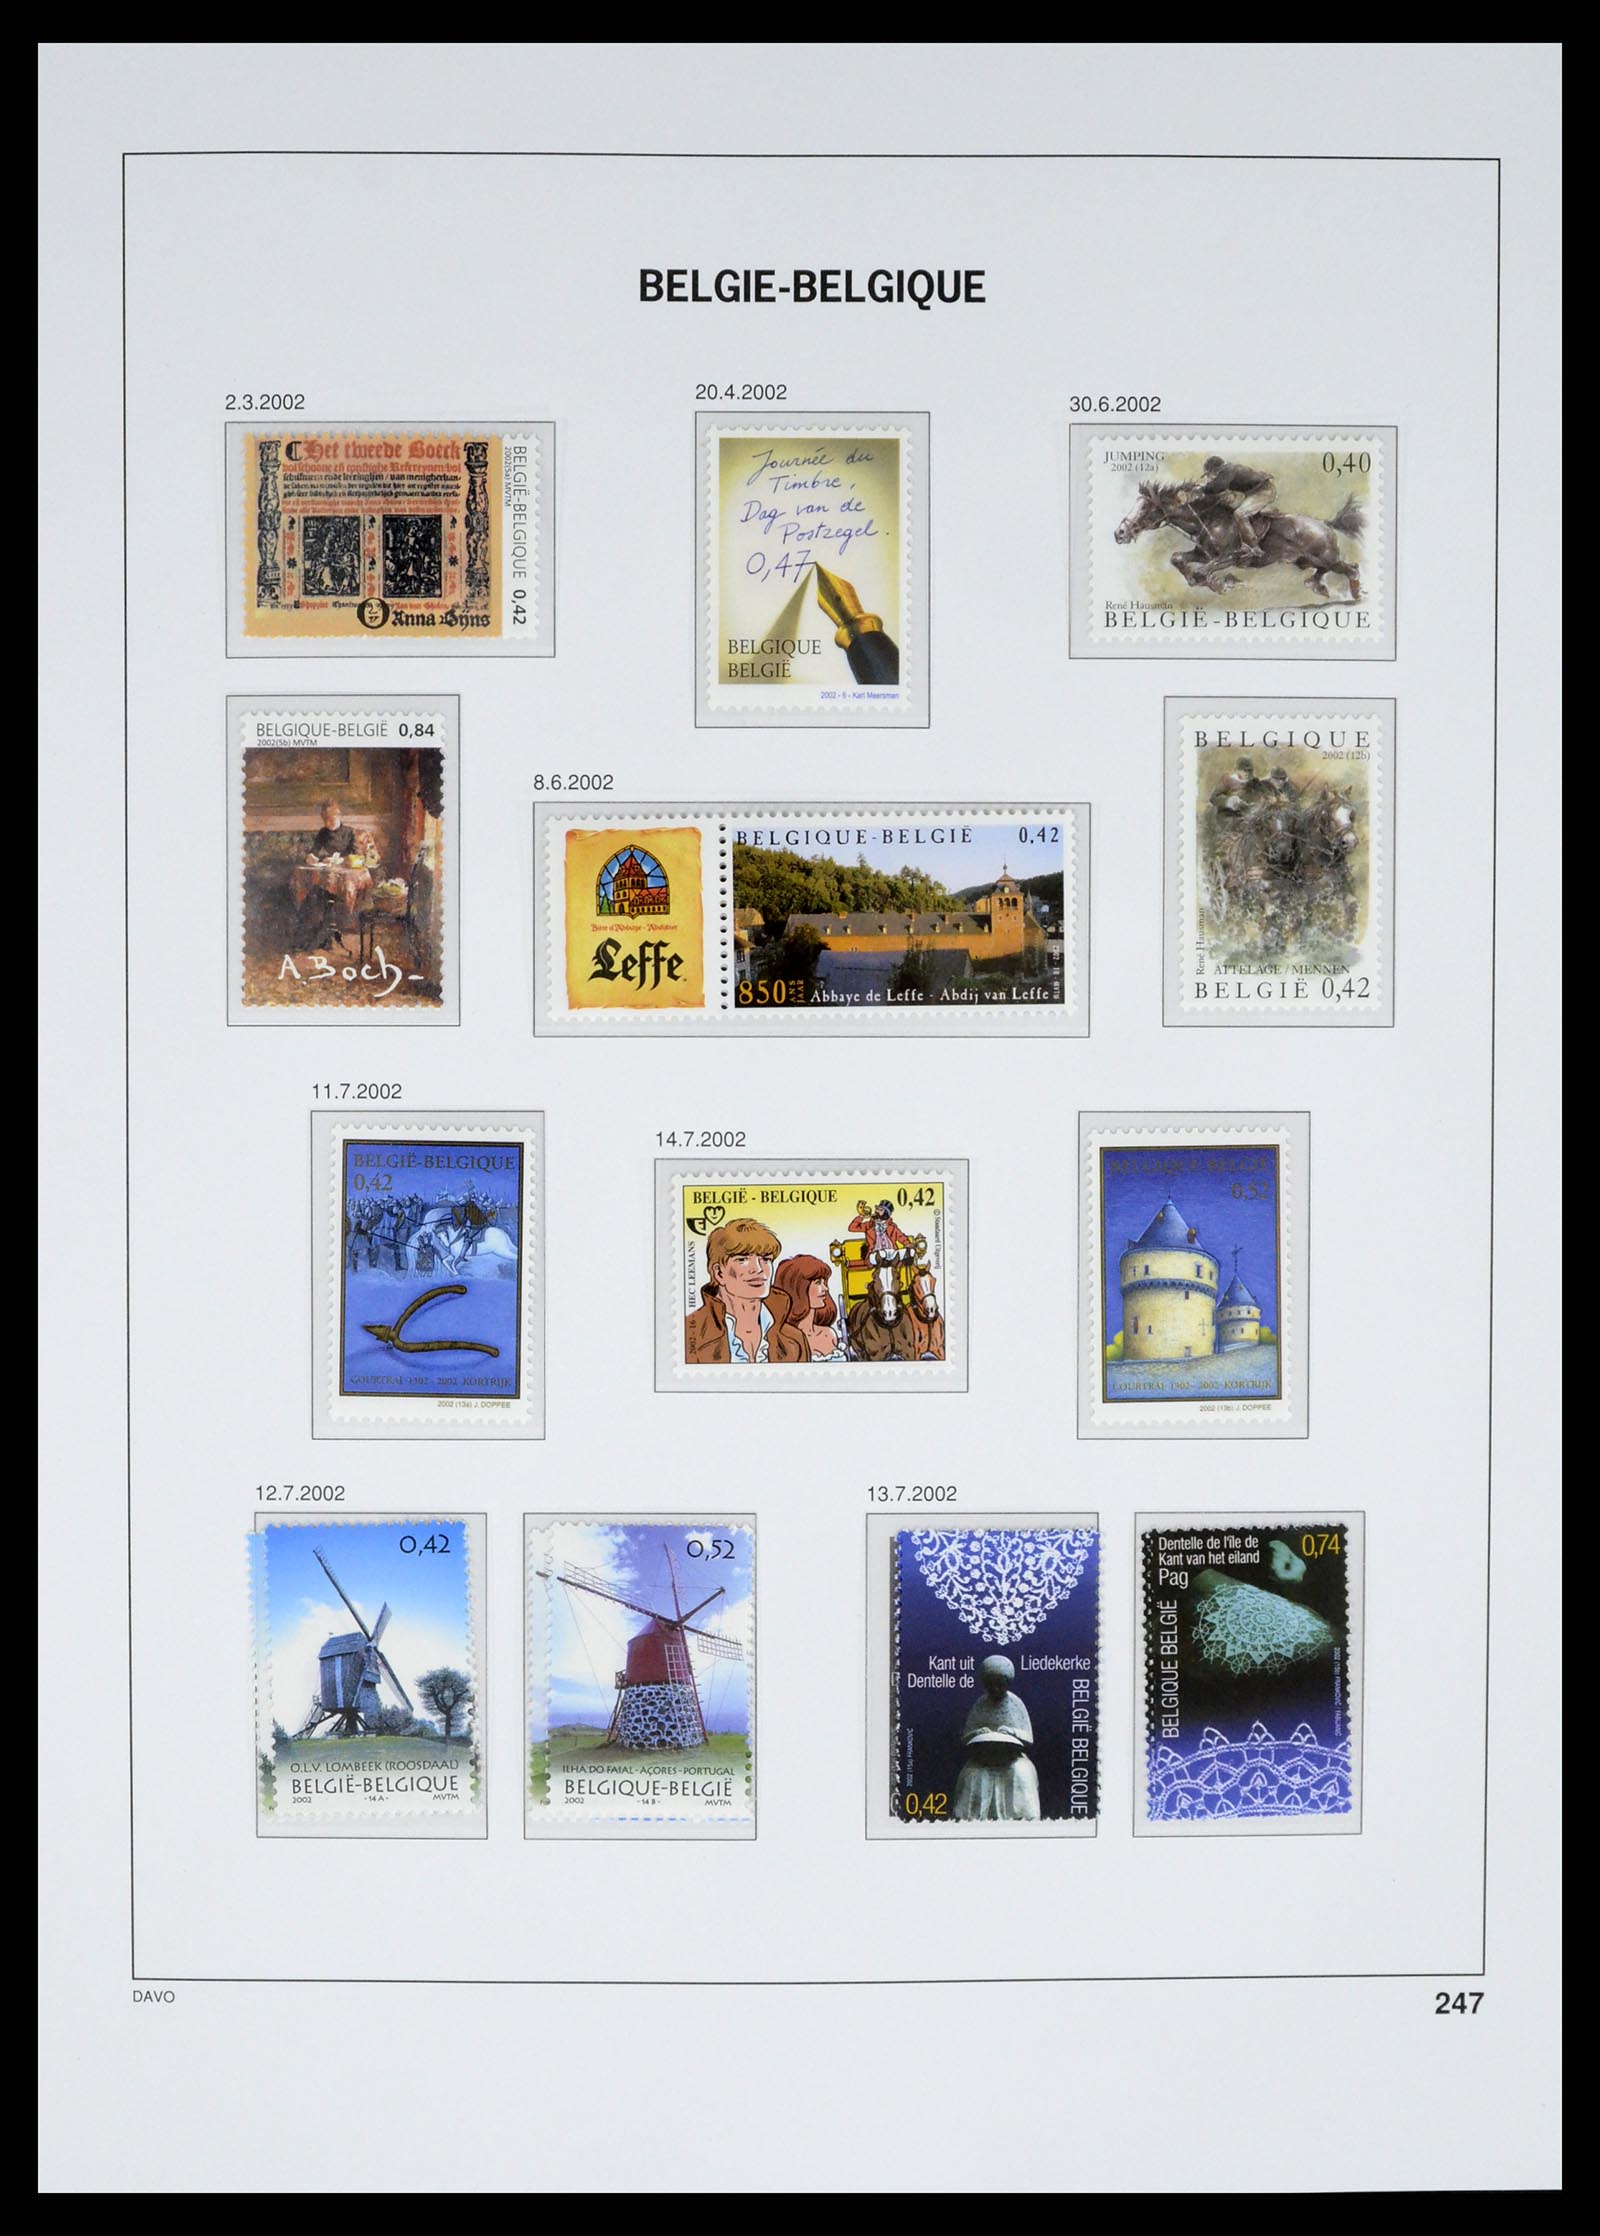 37368 190 - Stamp collection 37368 Belgium 1969-2003.